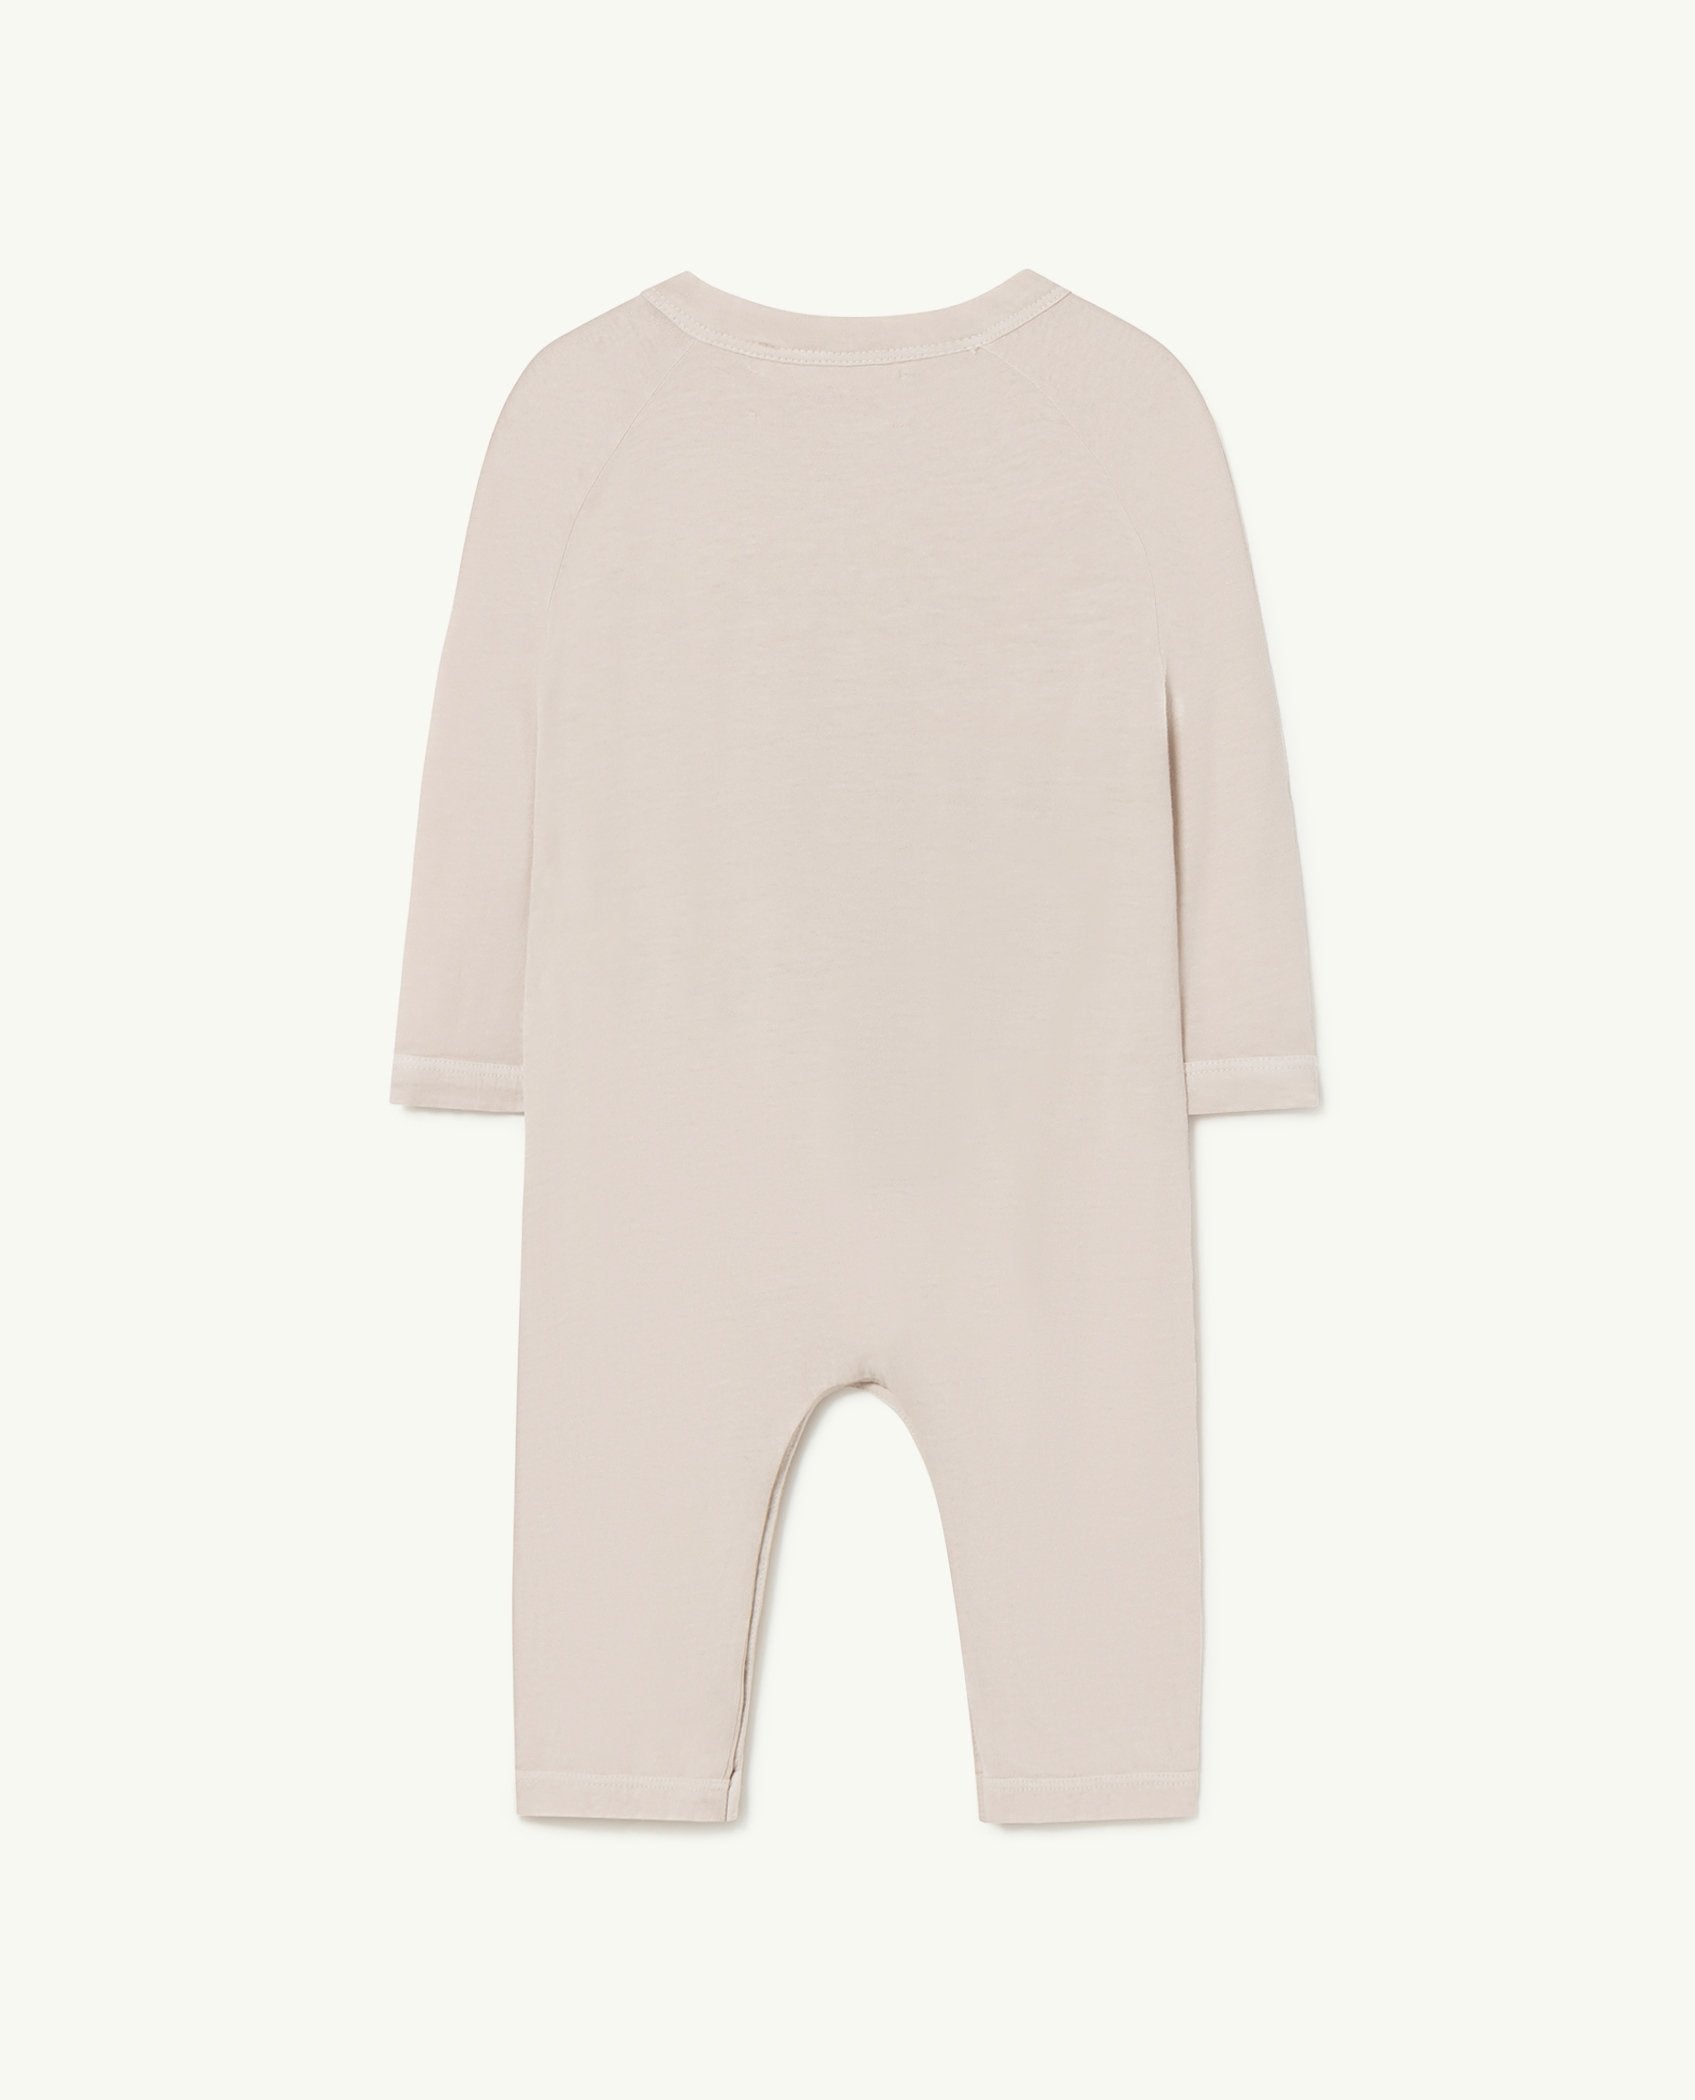 Soft Pink Owl Baby Pyjamas PRODUCT BACK